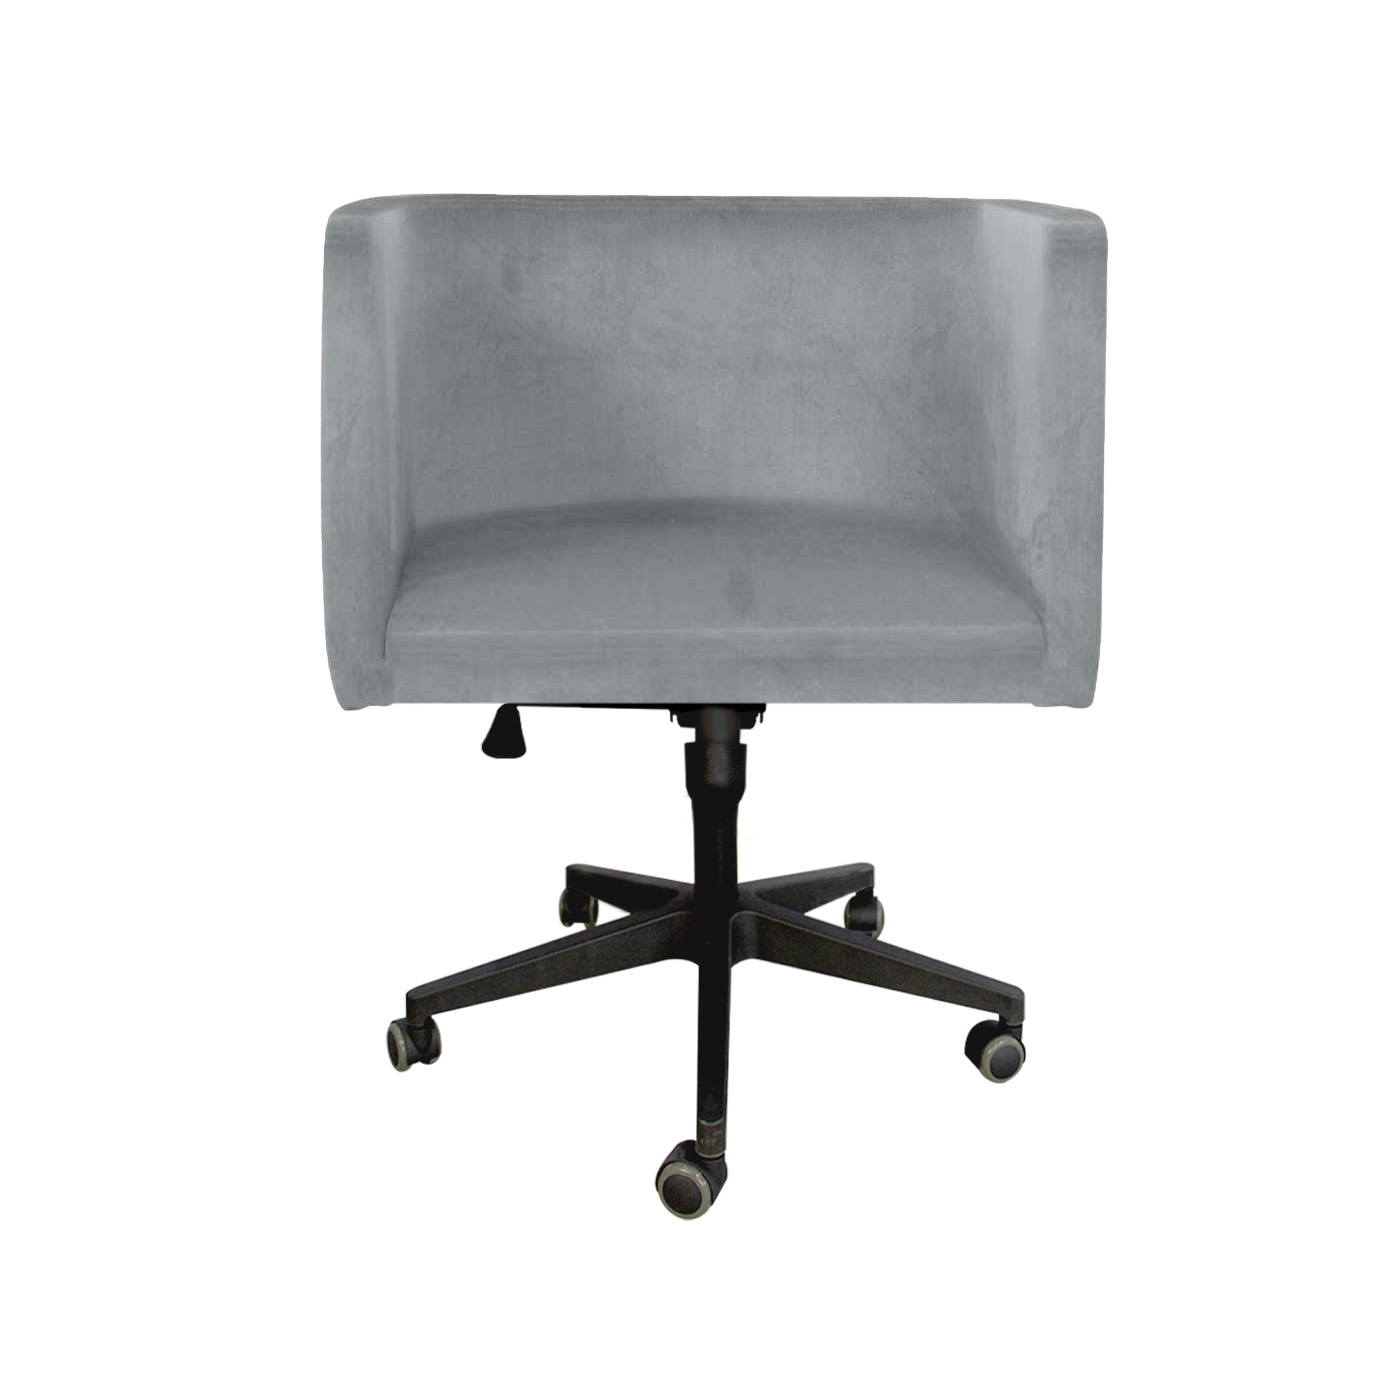 Dalian Silver Office Chair